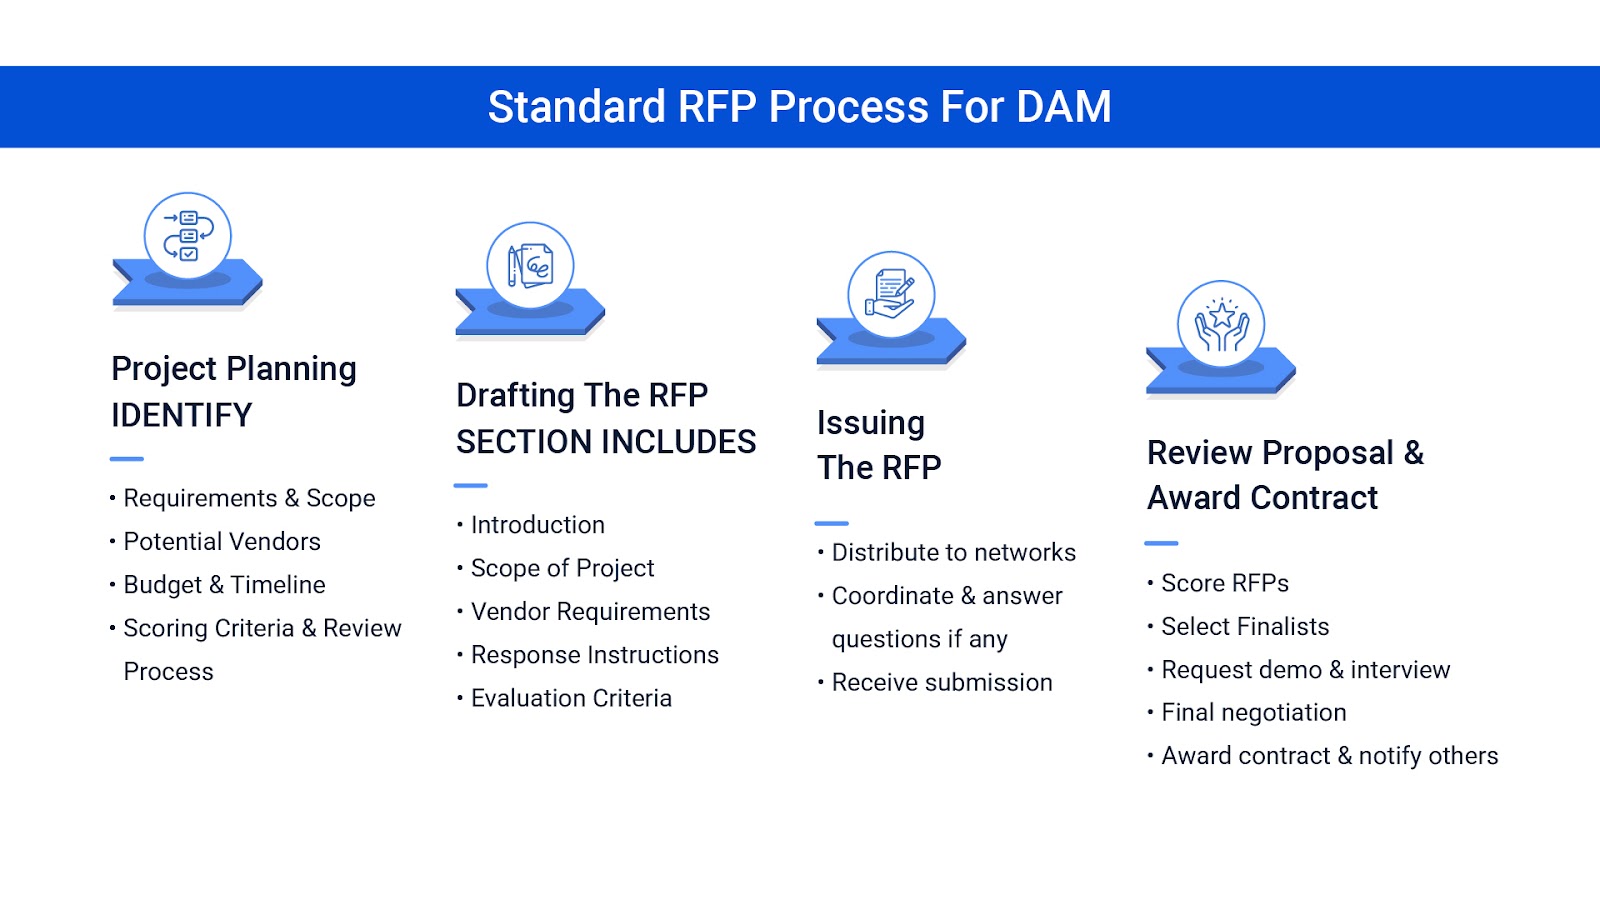 The steps of DAM RFP process 